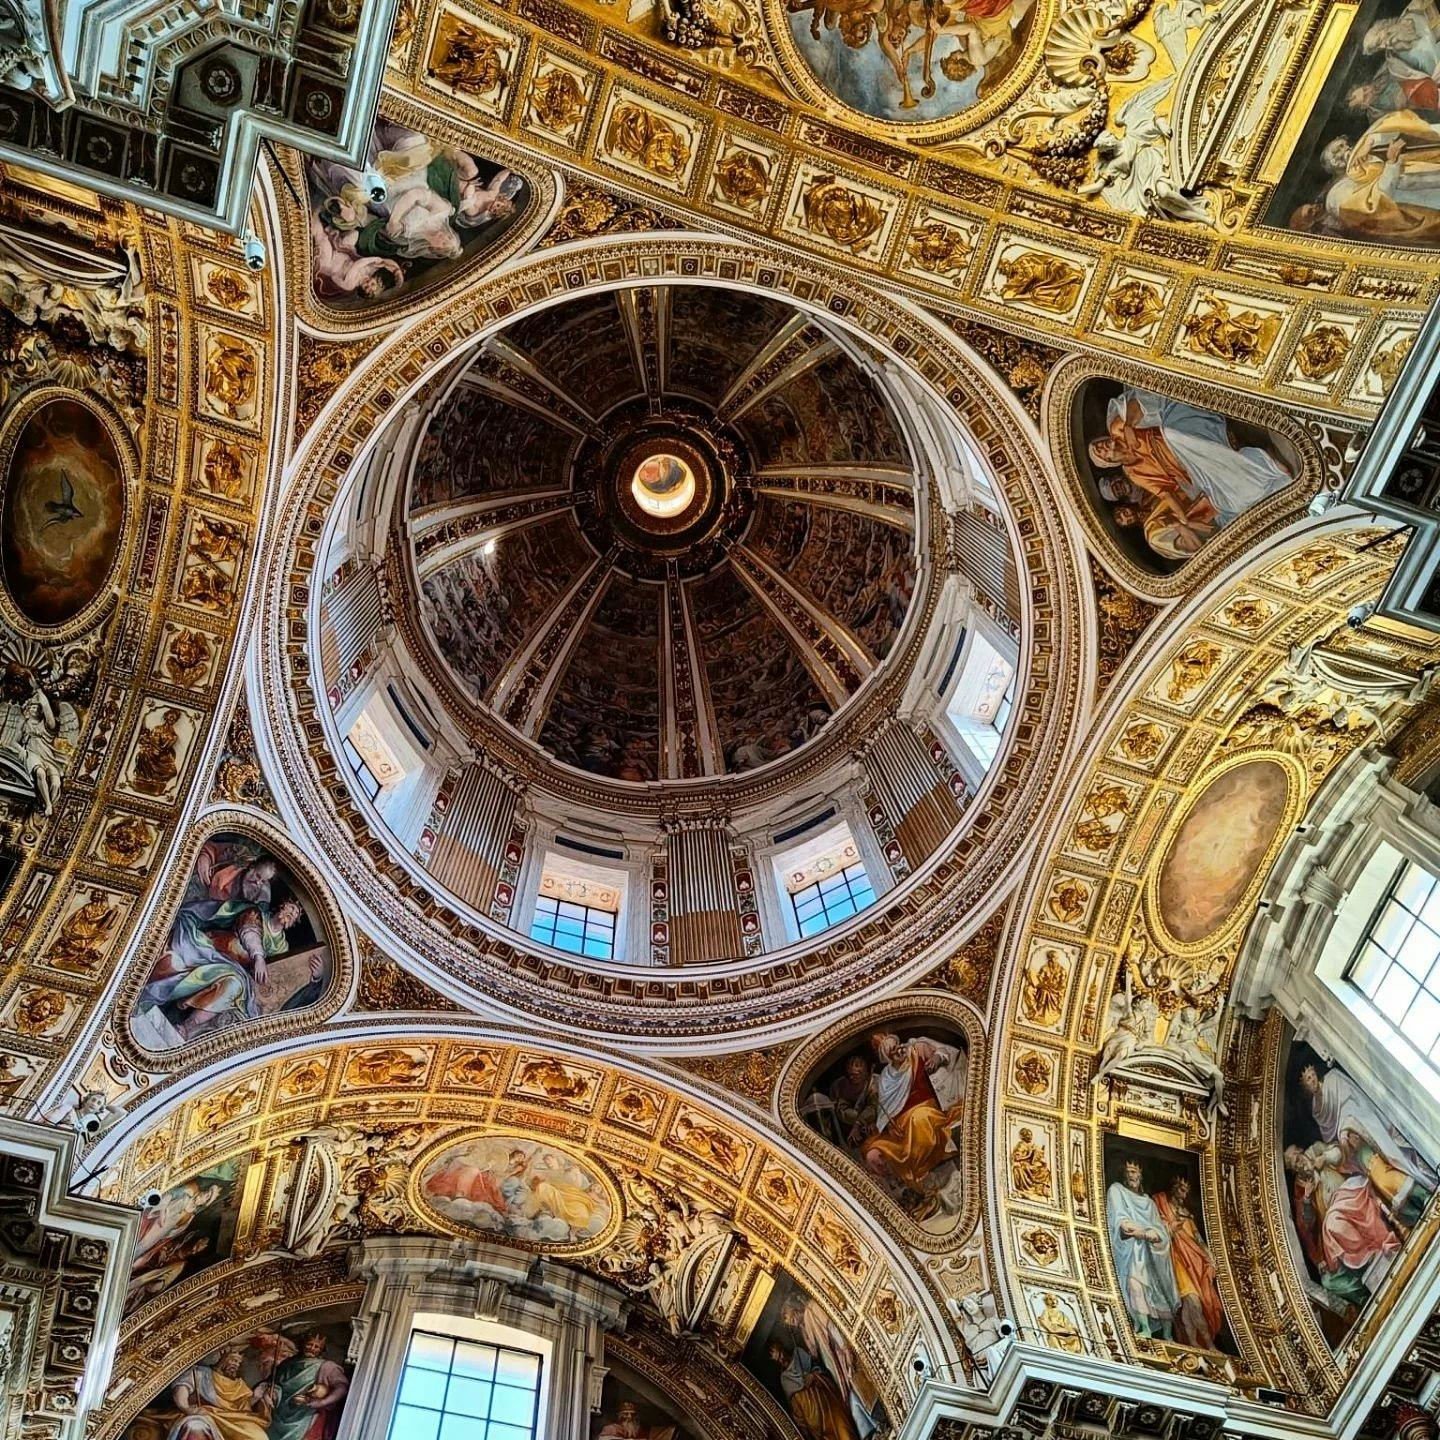 Visite des secrets sous la basilique de Santa Maria Maggiore